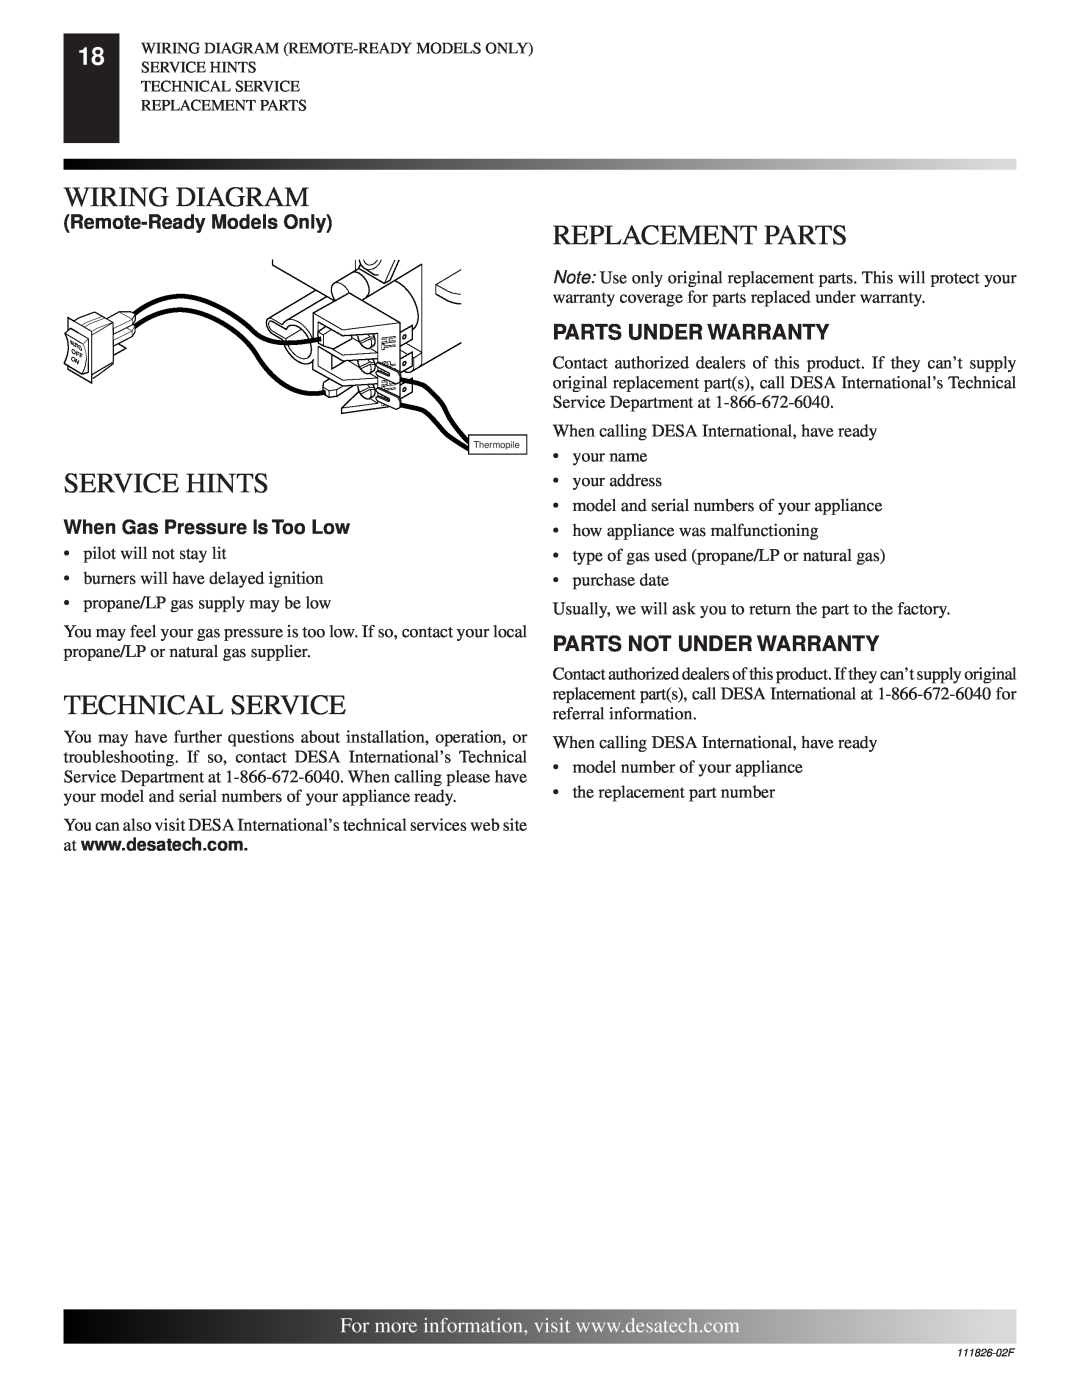 Desa VTD-18N-BTB, VTD-24P-PDG Wiring Diagram, Replacement Parts, Service Hints, Technical Service, Parts Under Warranty 